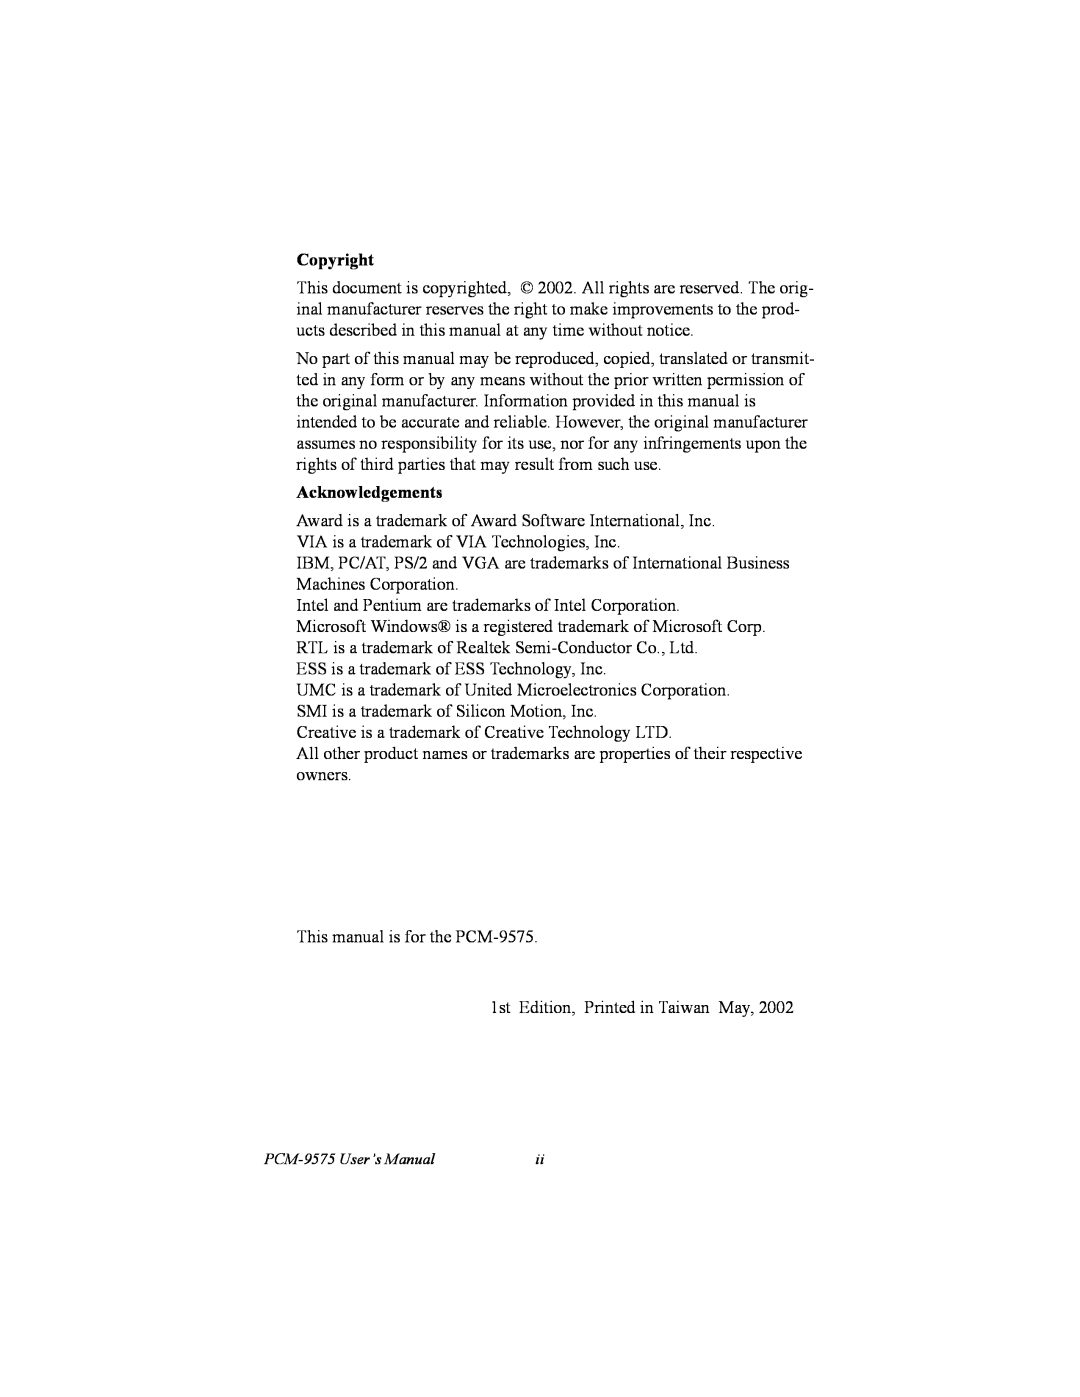 IBM PCM-9575, 100/10 user manual Copyright, Acknowledgements 